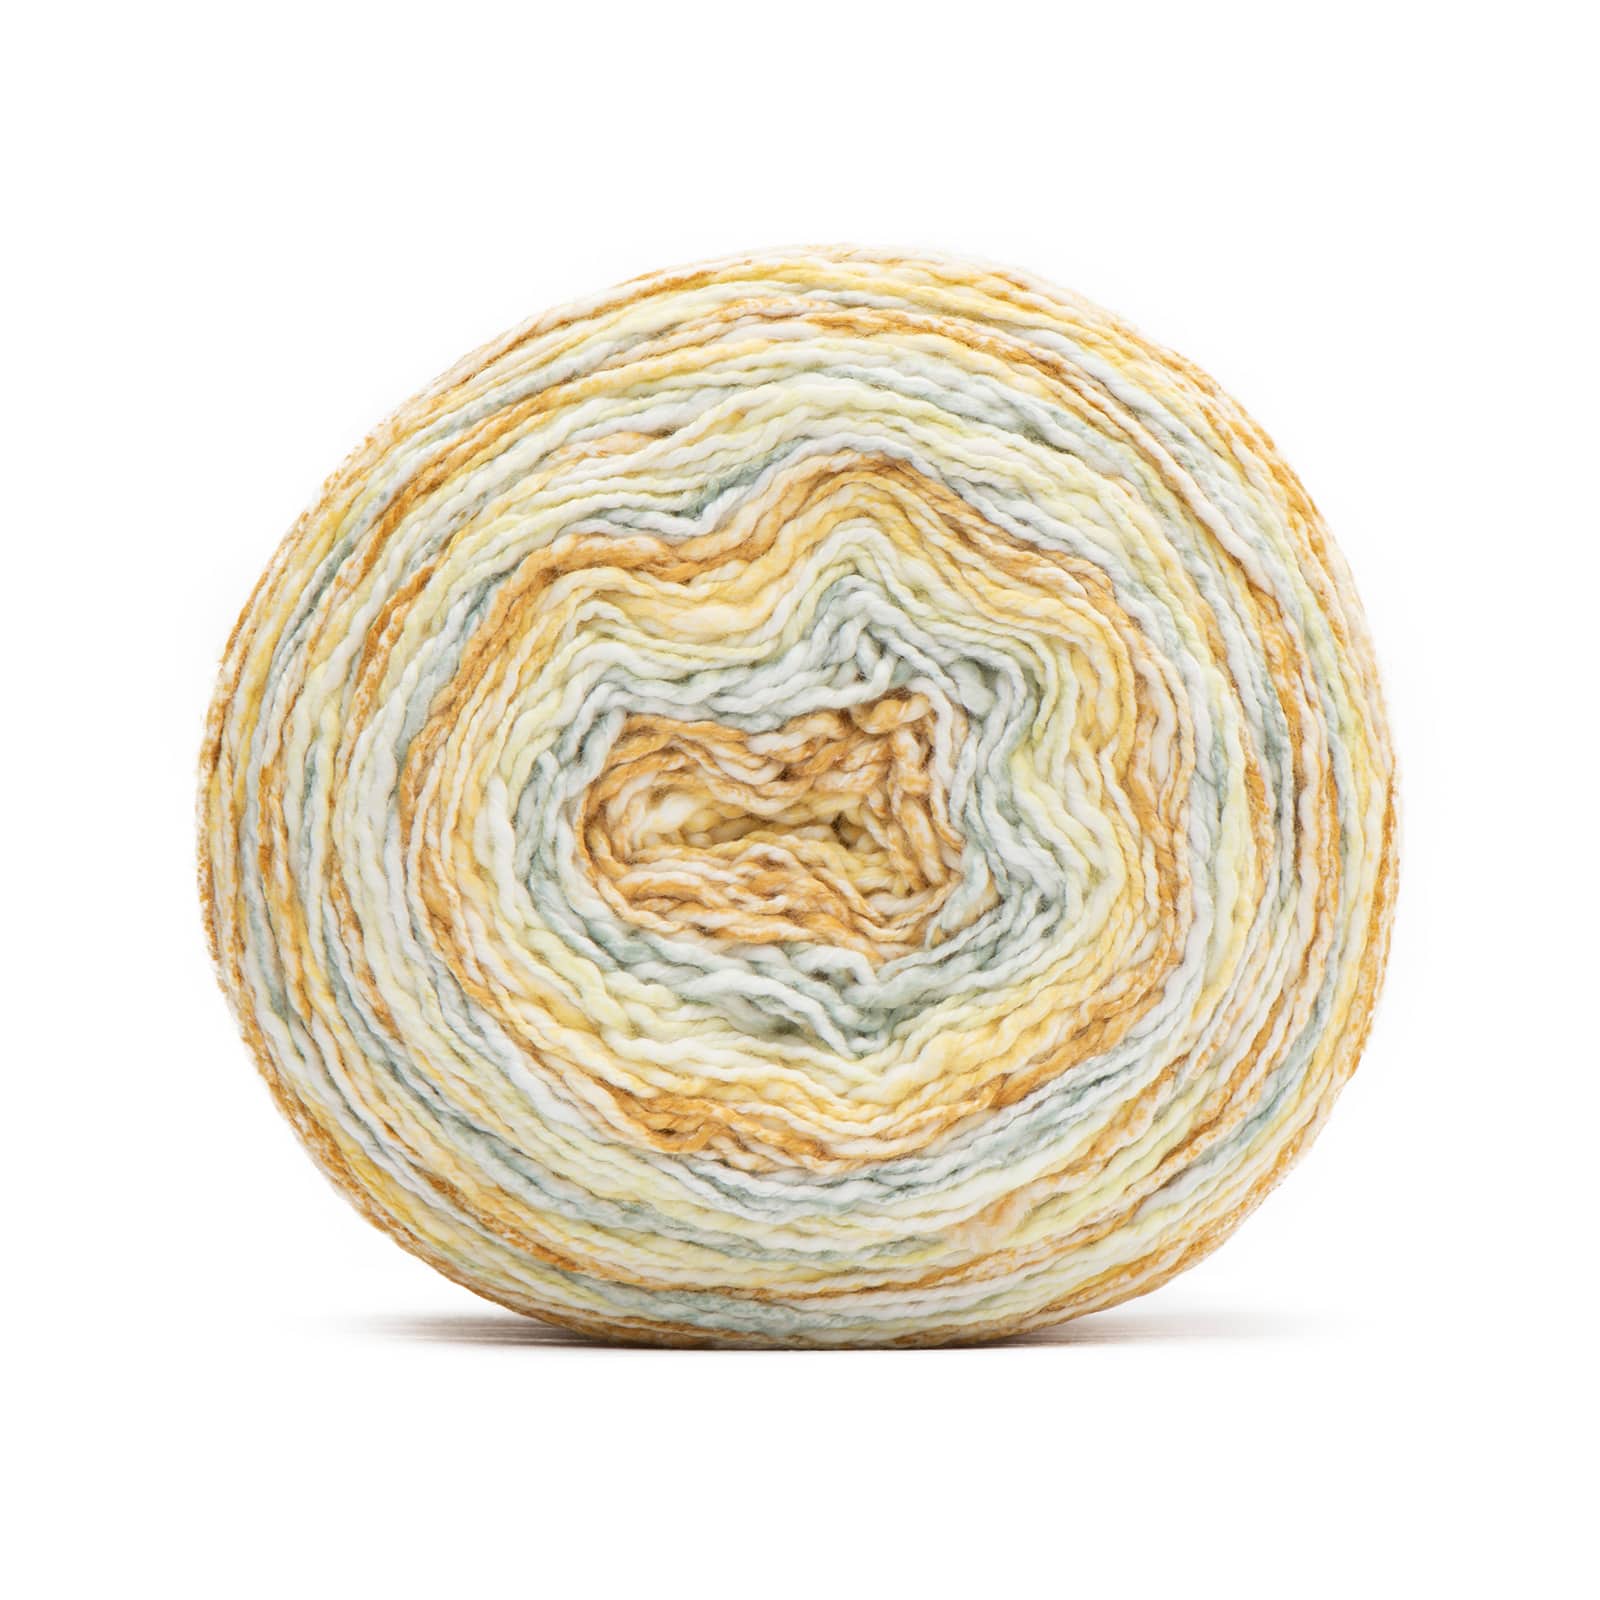 Caron Cotton Ripple Cakes Yarn, Size: 8.5